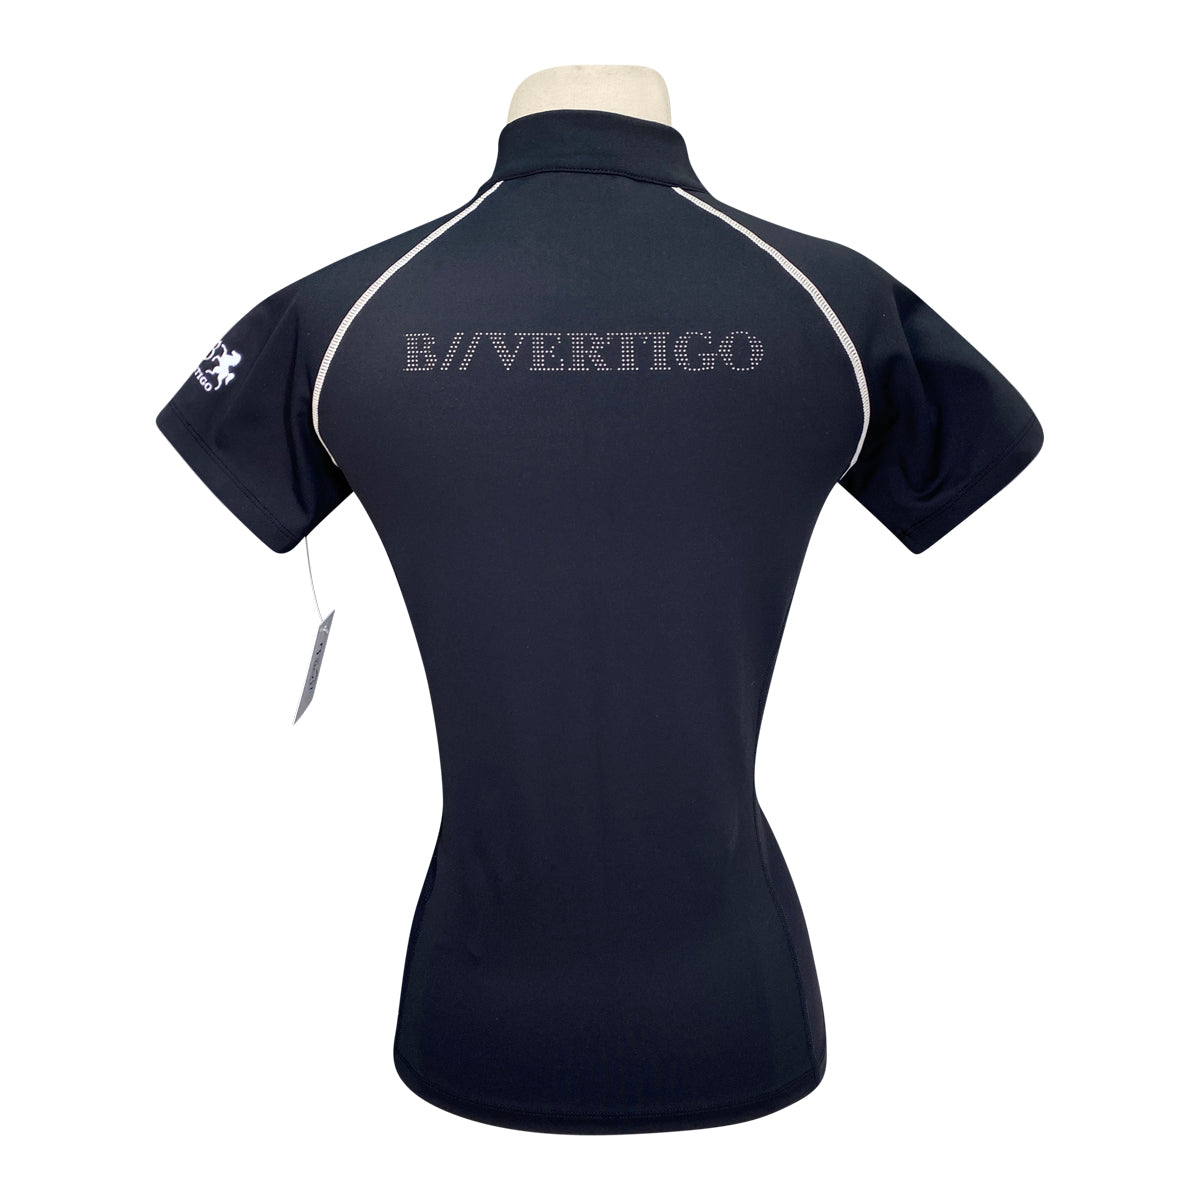 B Vertigo 'Adara' Short Sleeve Training Shirt in Black